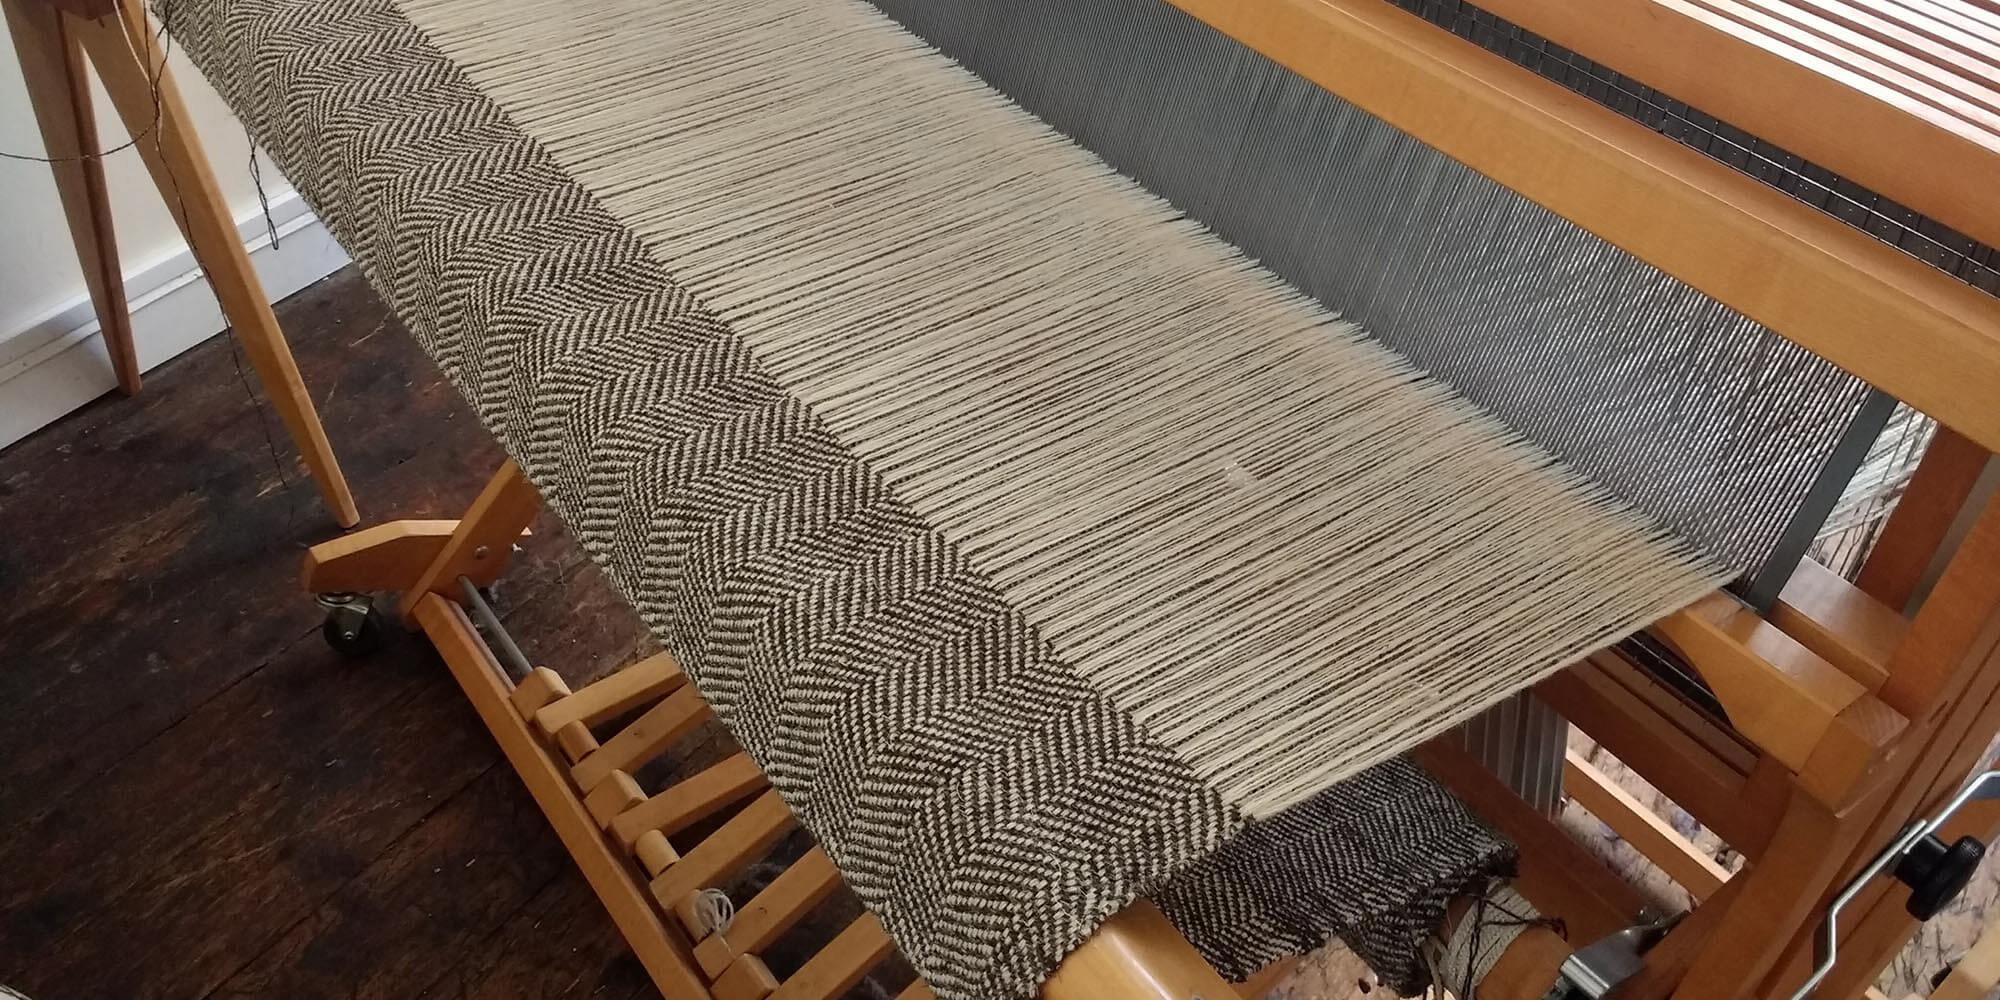 Ali Sharman’s weaving loom at Farfield Mill, Sedbergh